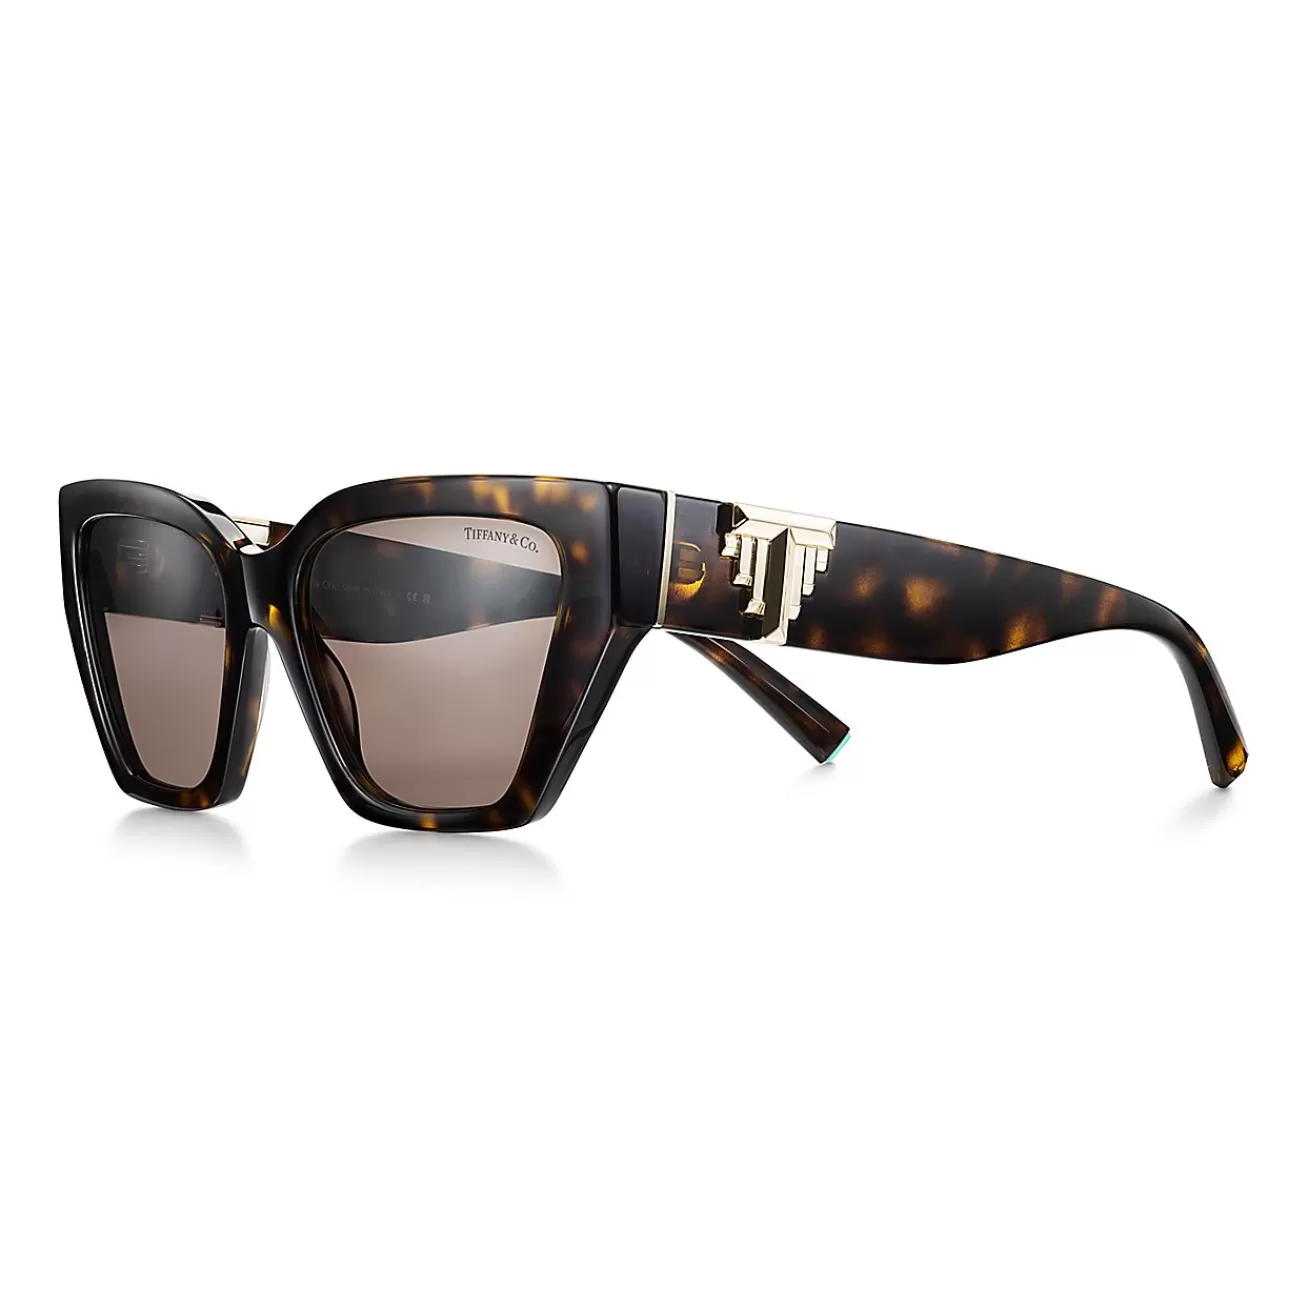 Tiffany & Co. Tiffany T Deco Sunglasses in Tortoise Acetate, Gold-colored Metal & Brown Lenses | ^Women Tiffany T | Sunglasses